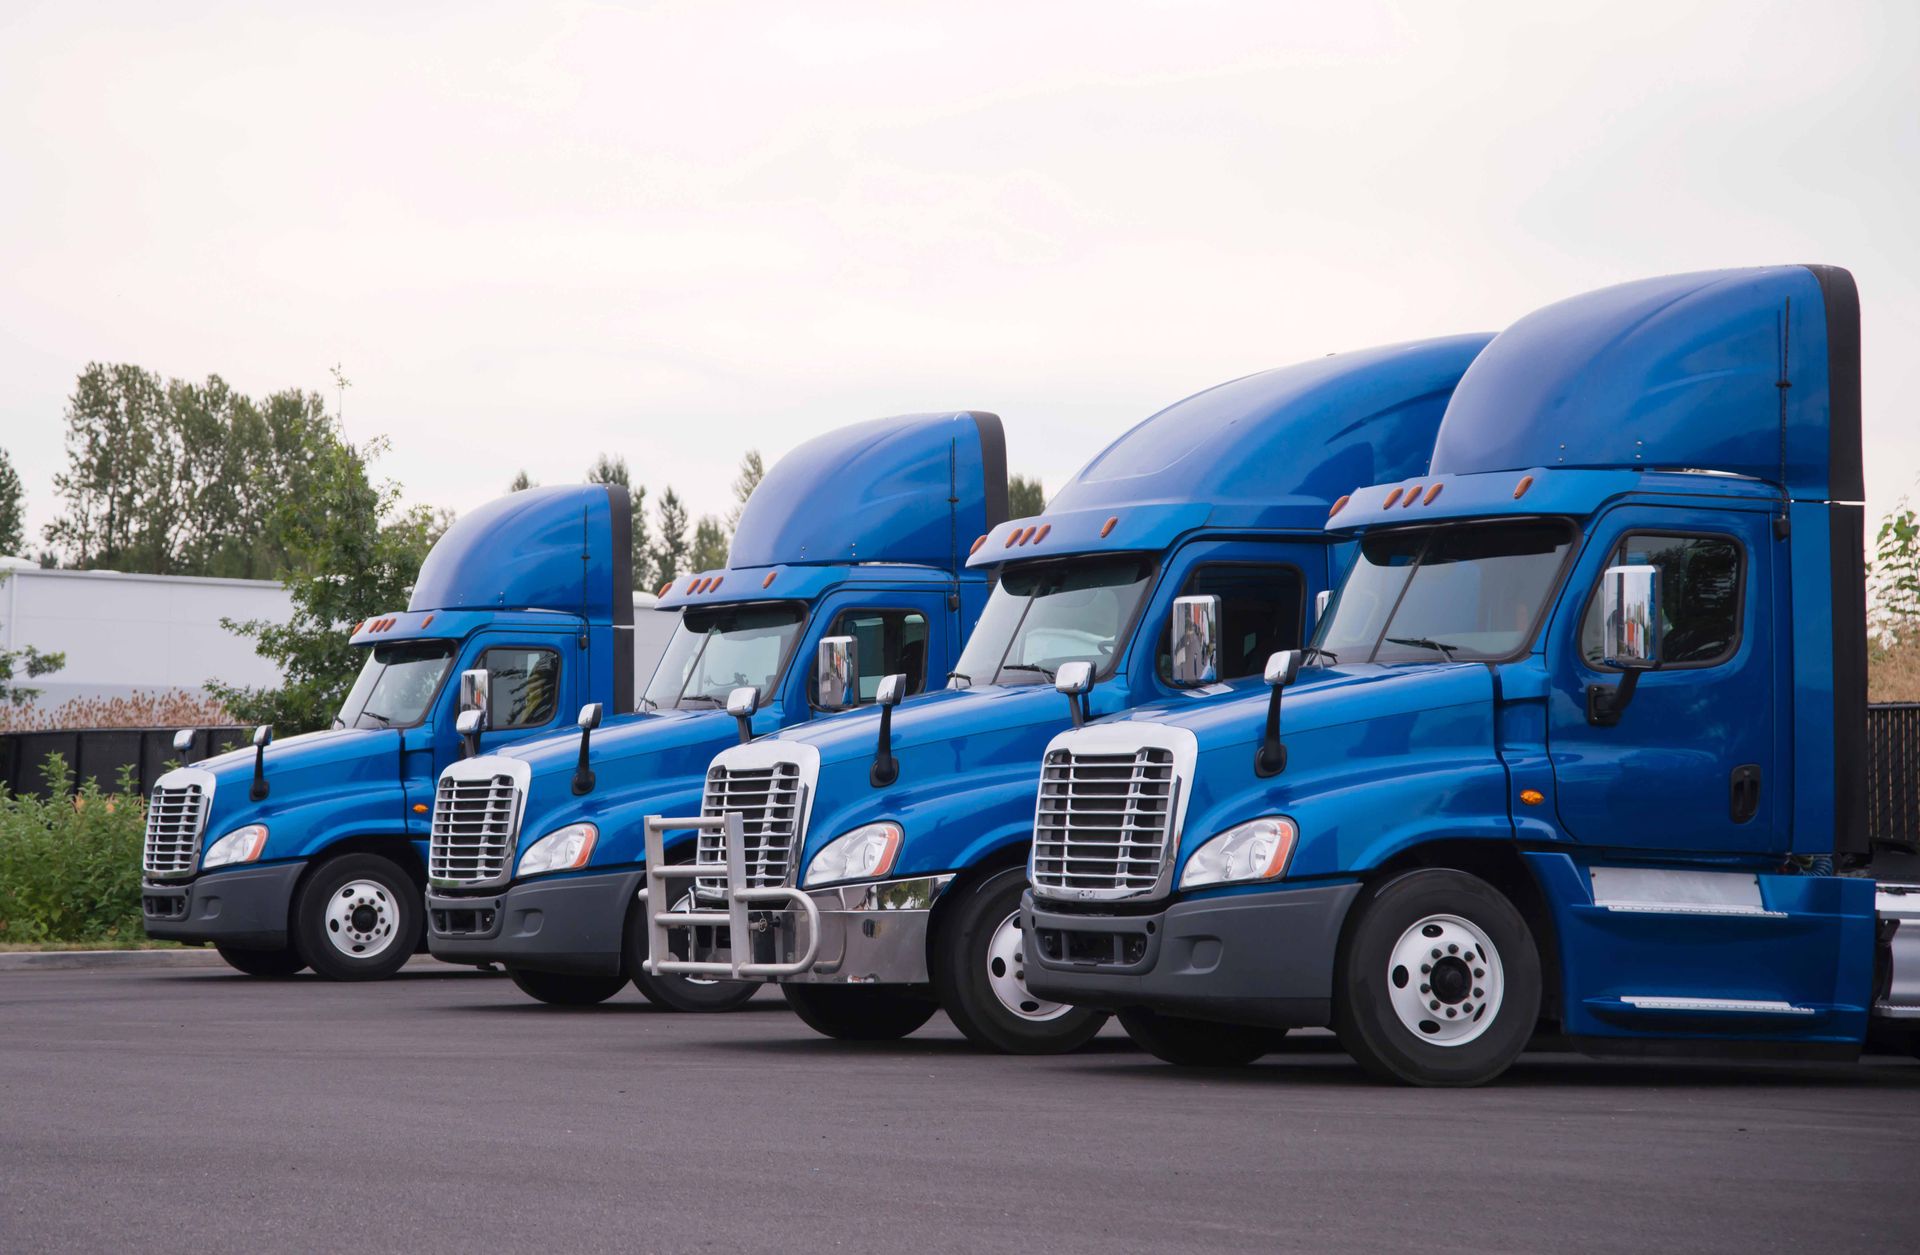 Clean Fleet of Blue Trucks